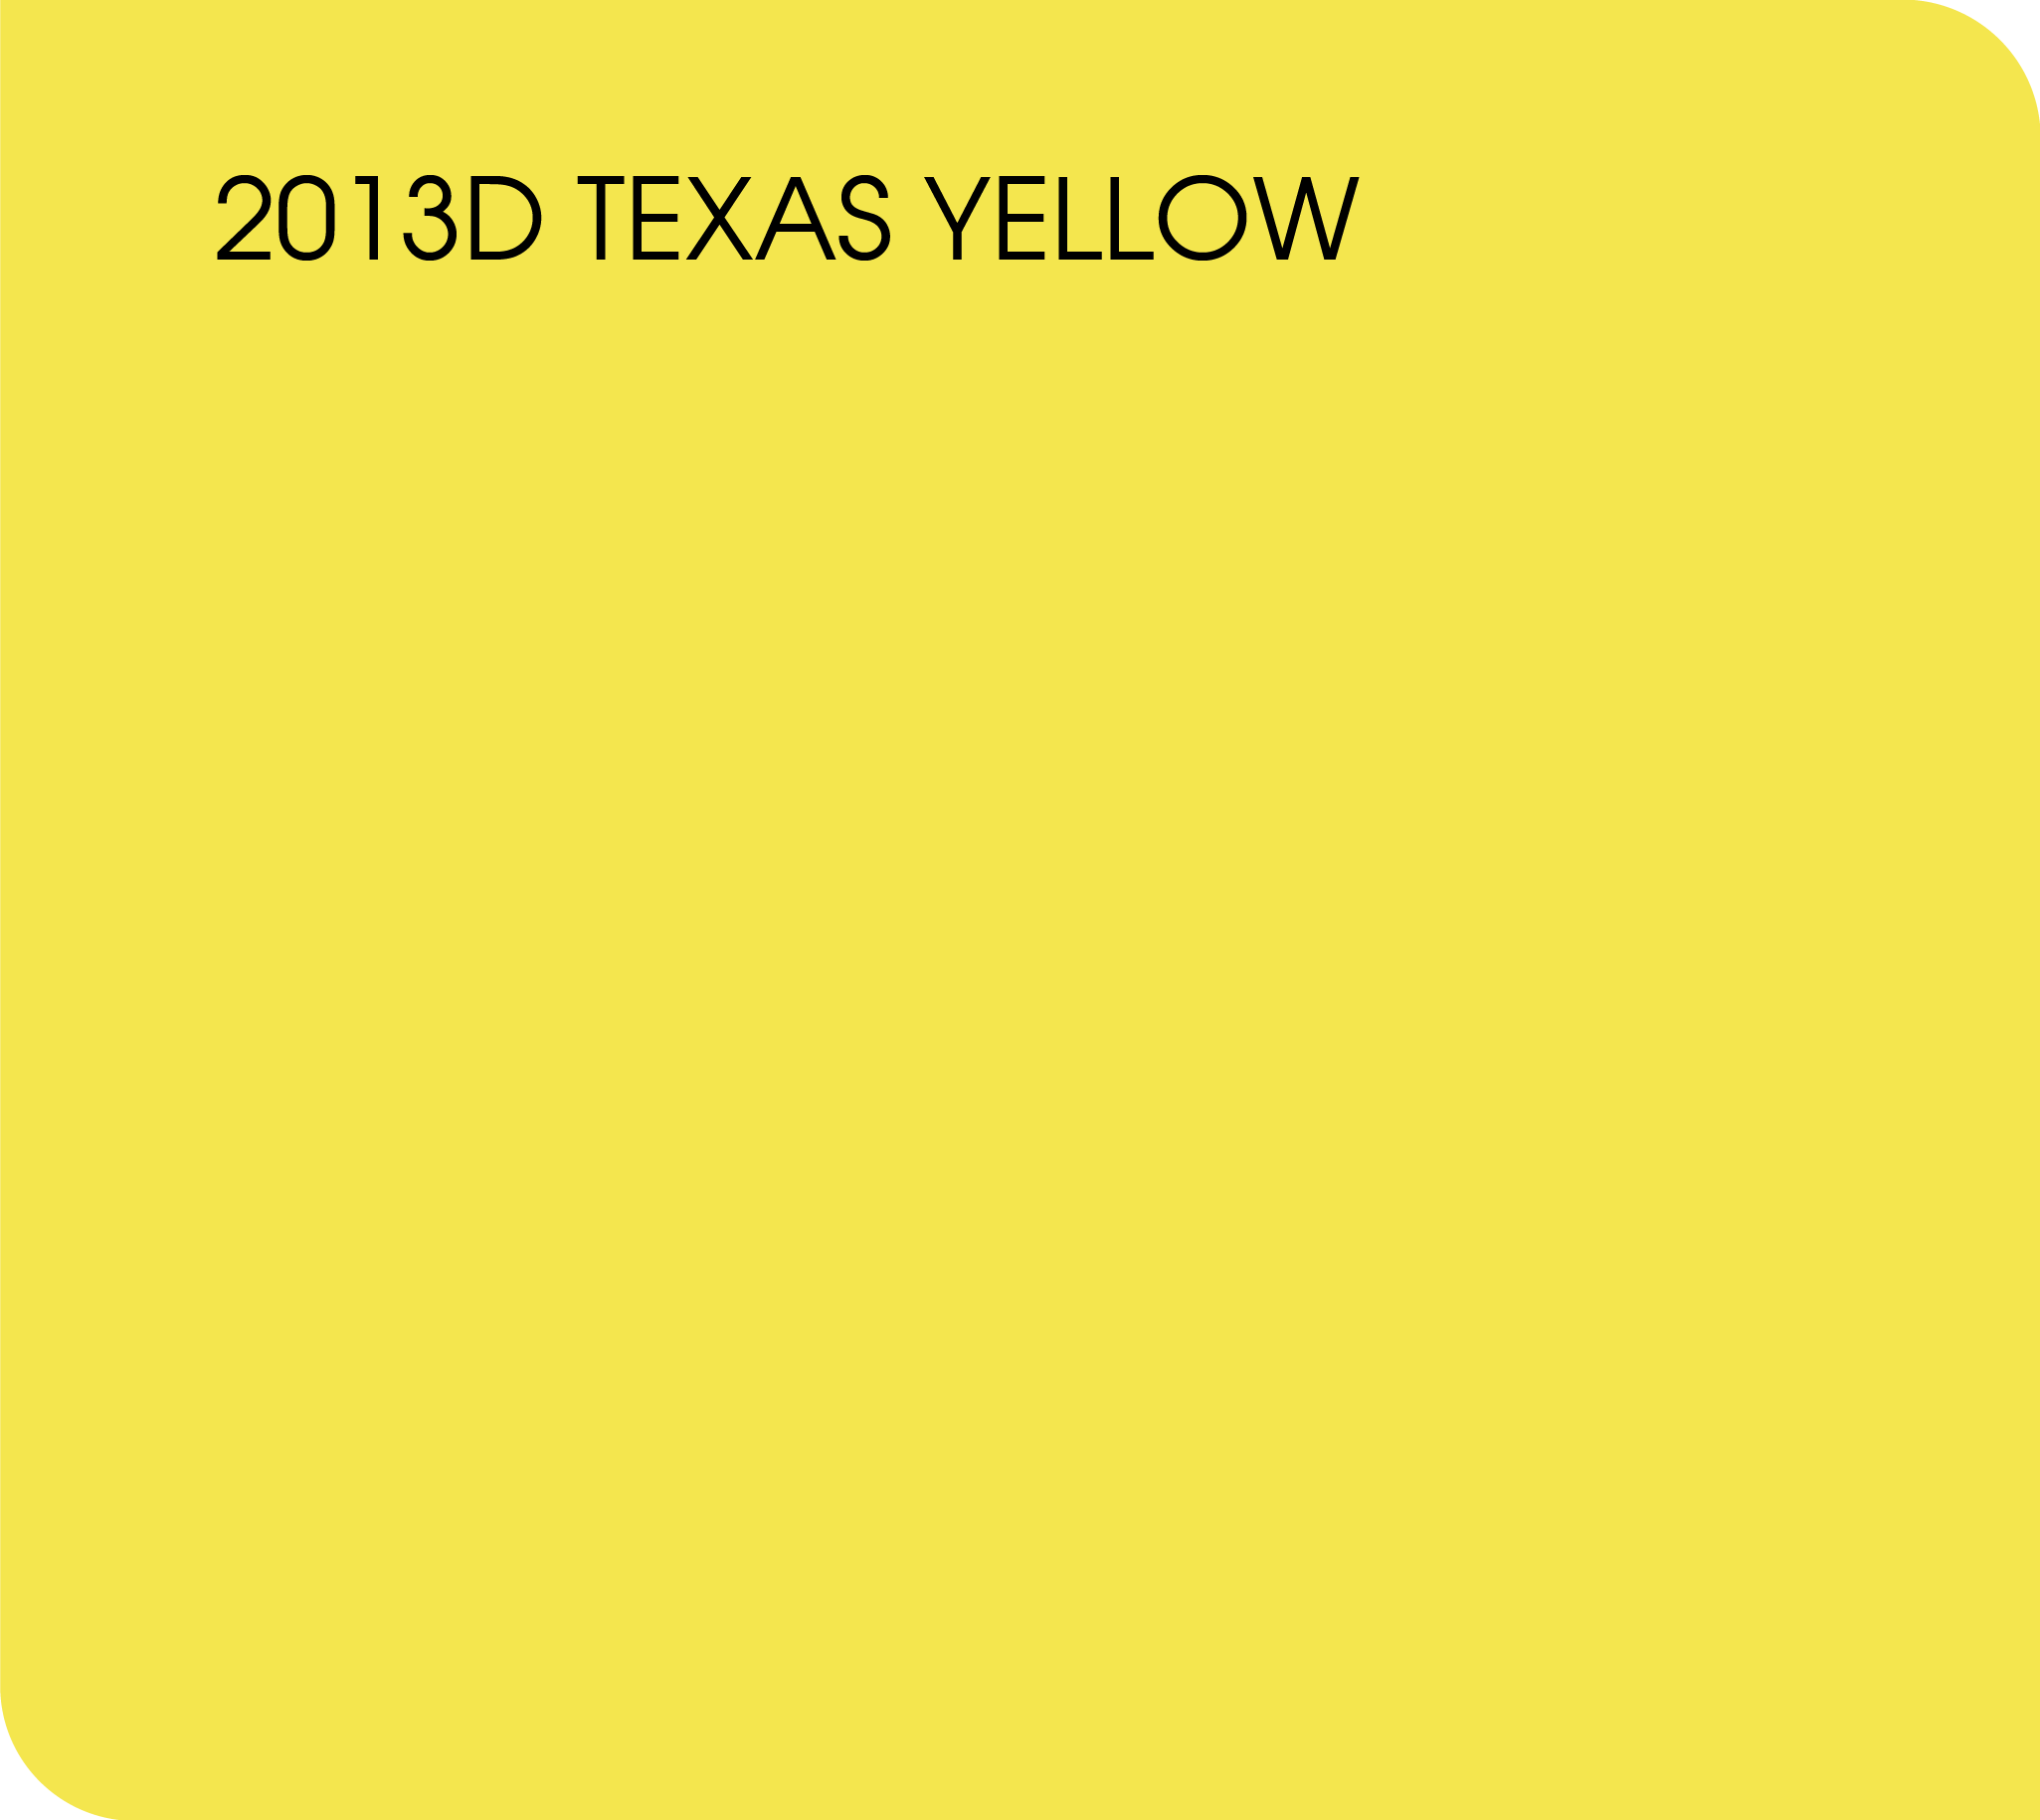 Texas yellow